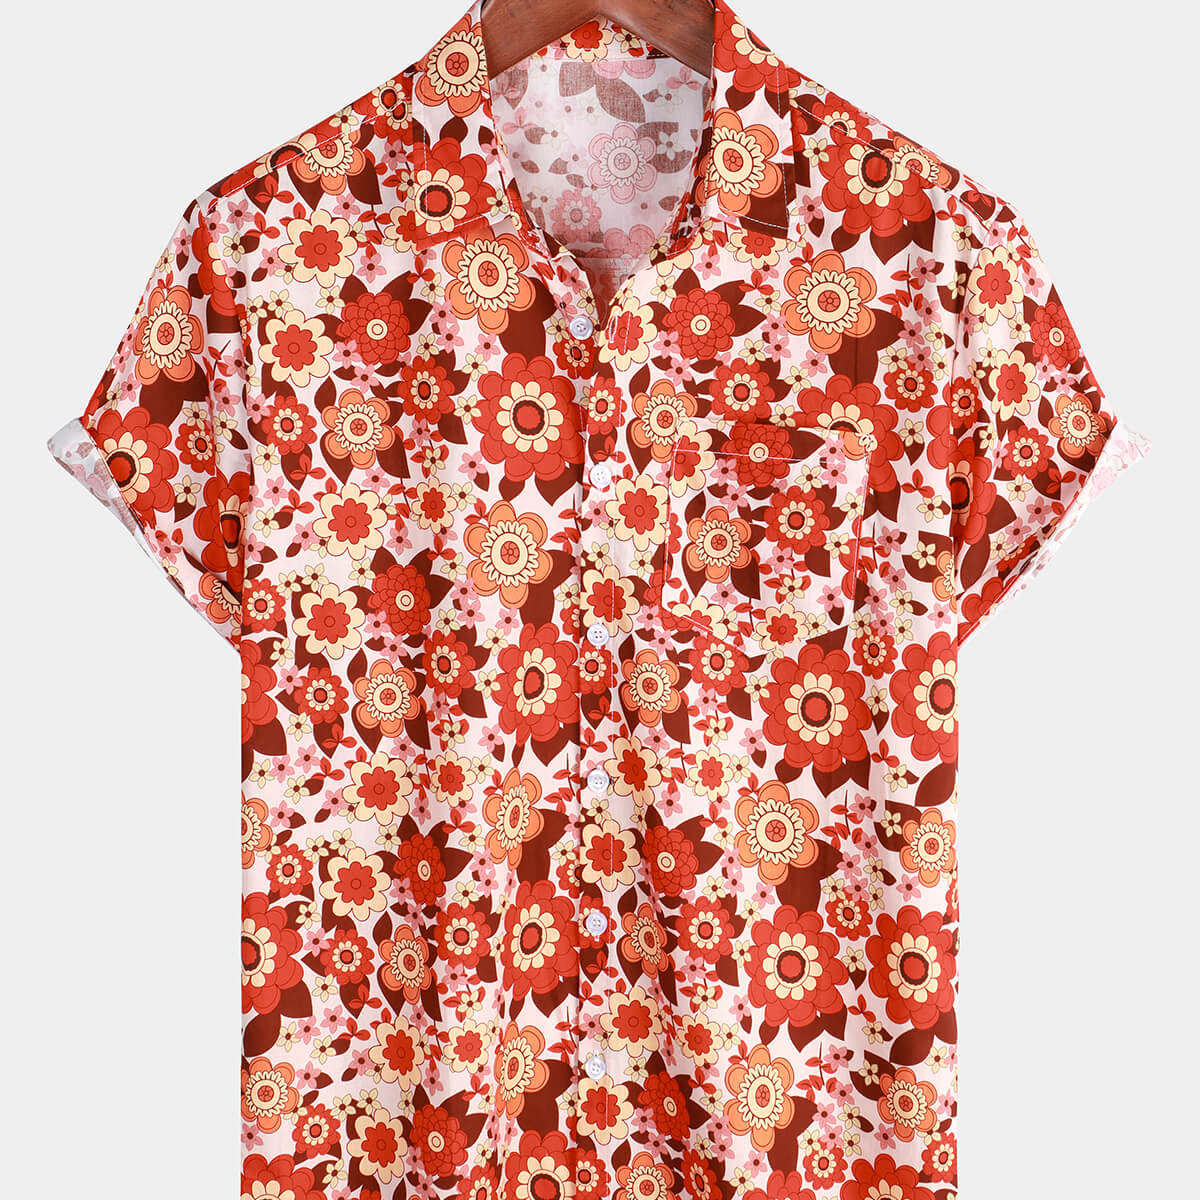 Men's Orange Floral Vintage Beach Holiday Short Sleeve Shirt